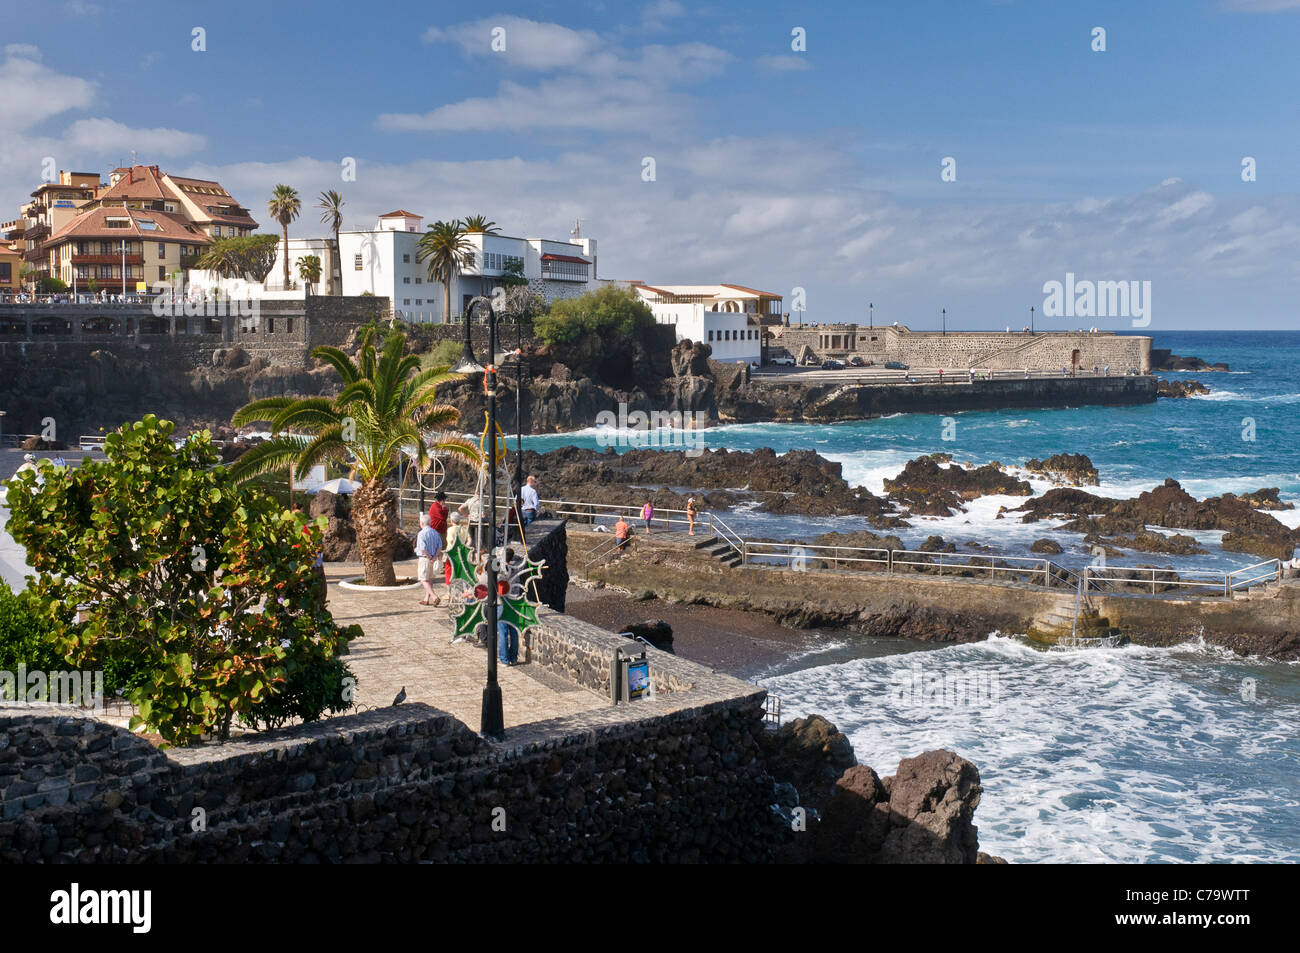 Piscine d'eau de mer, Puerto de la Cruz, Tenerife, Canaries, Espagne, Europe Banque D'Images